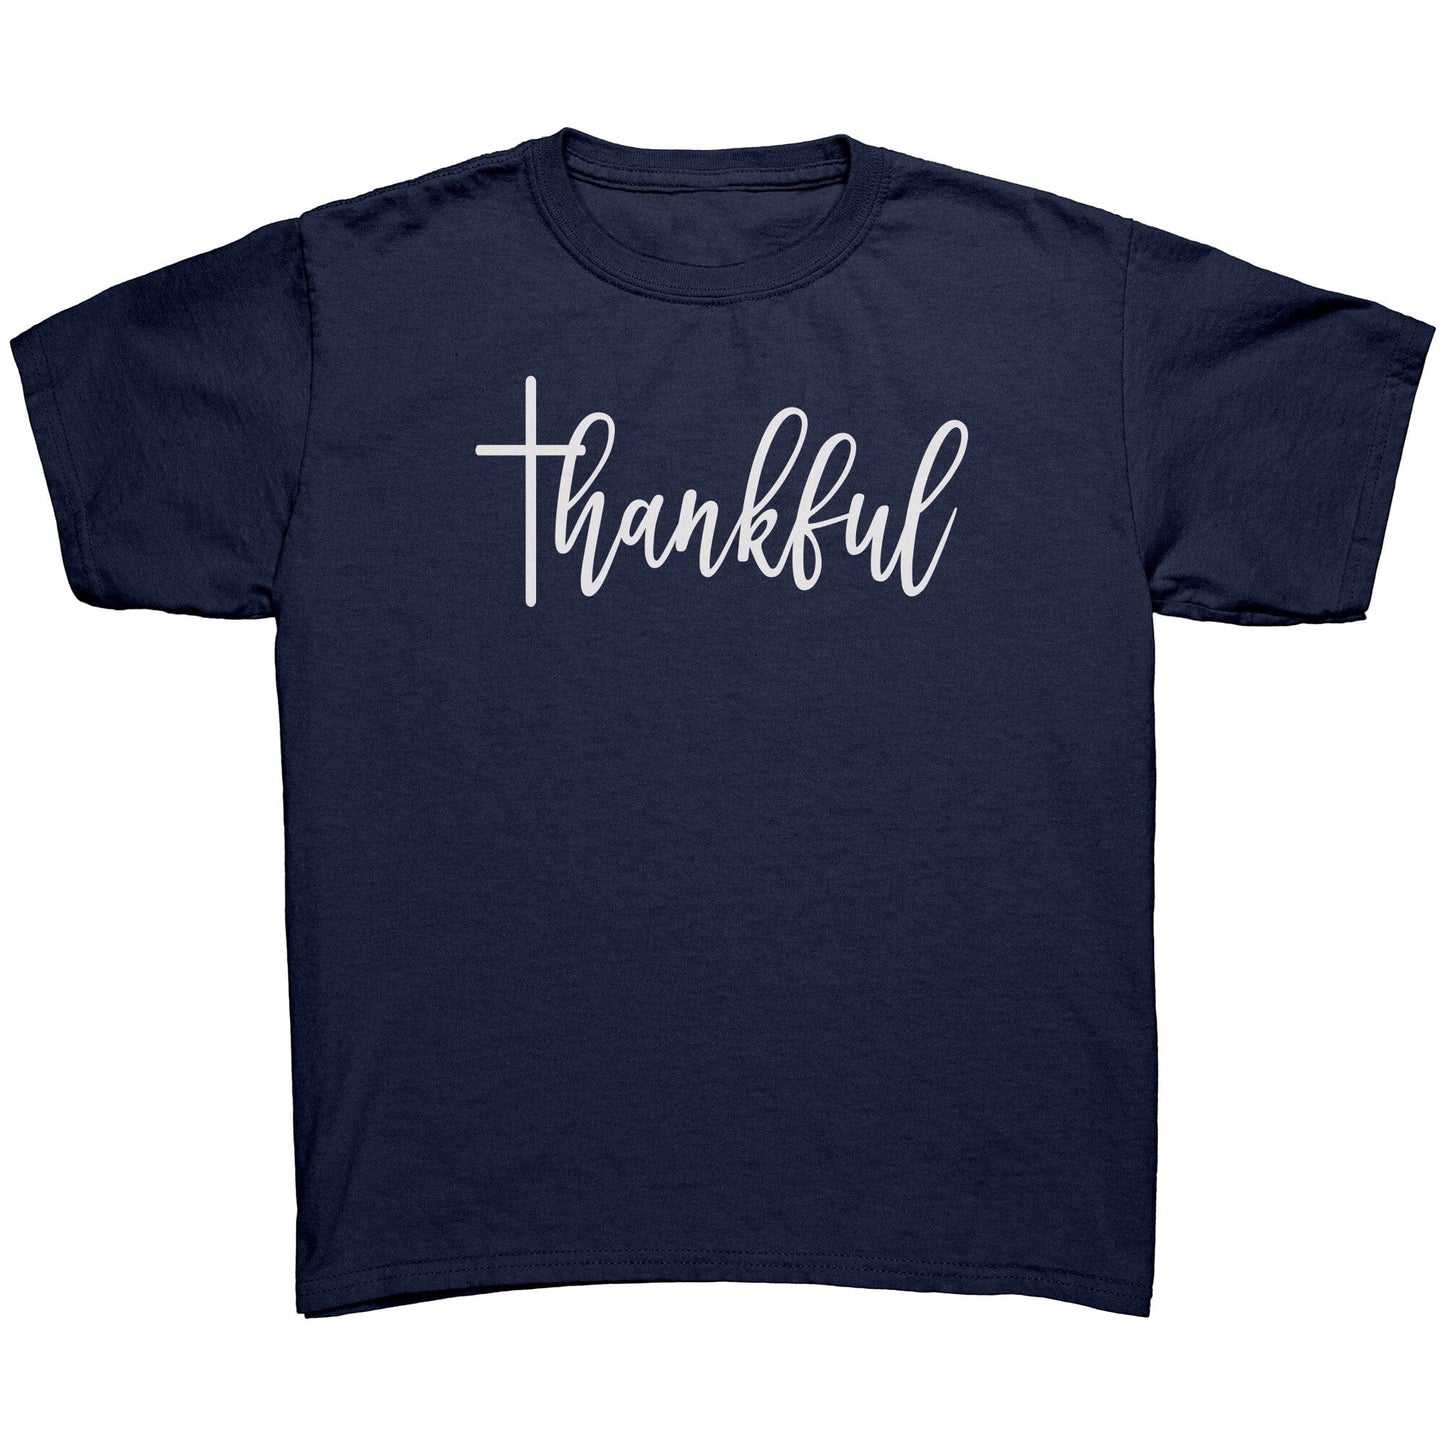 Thankful Youth T-Shirt